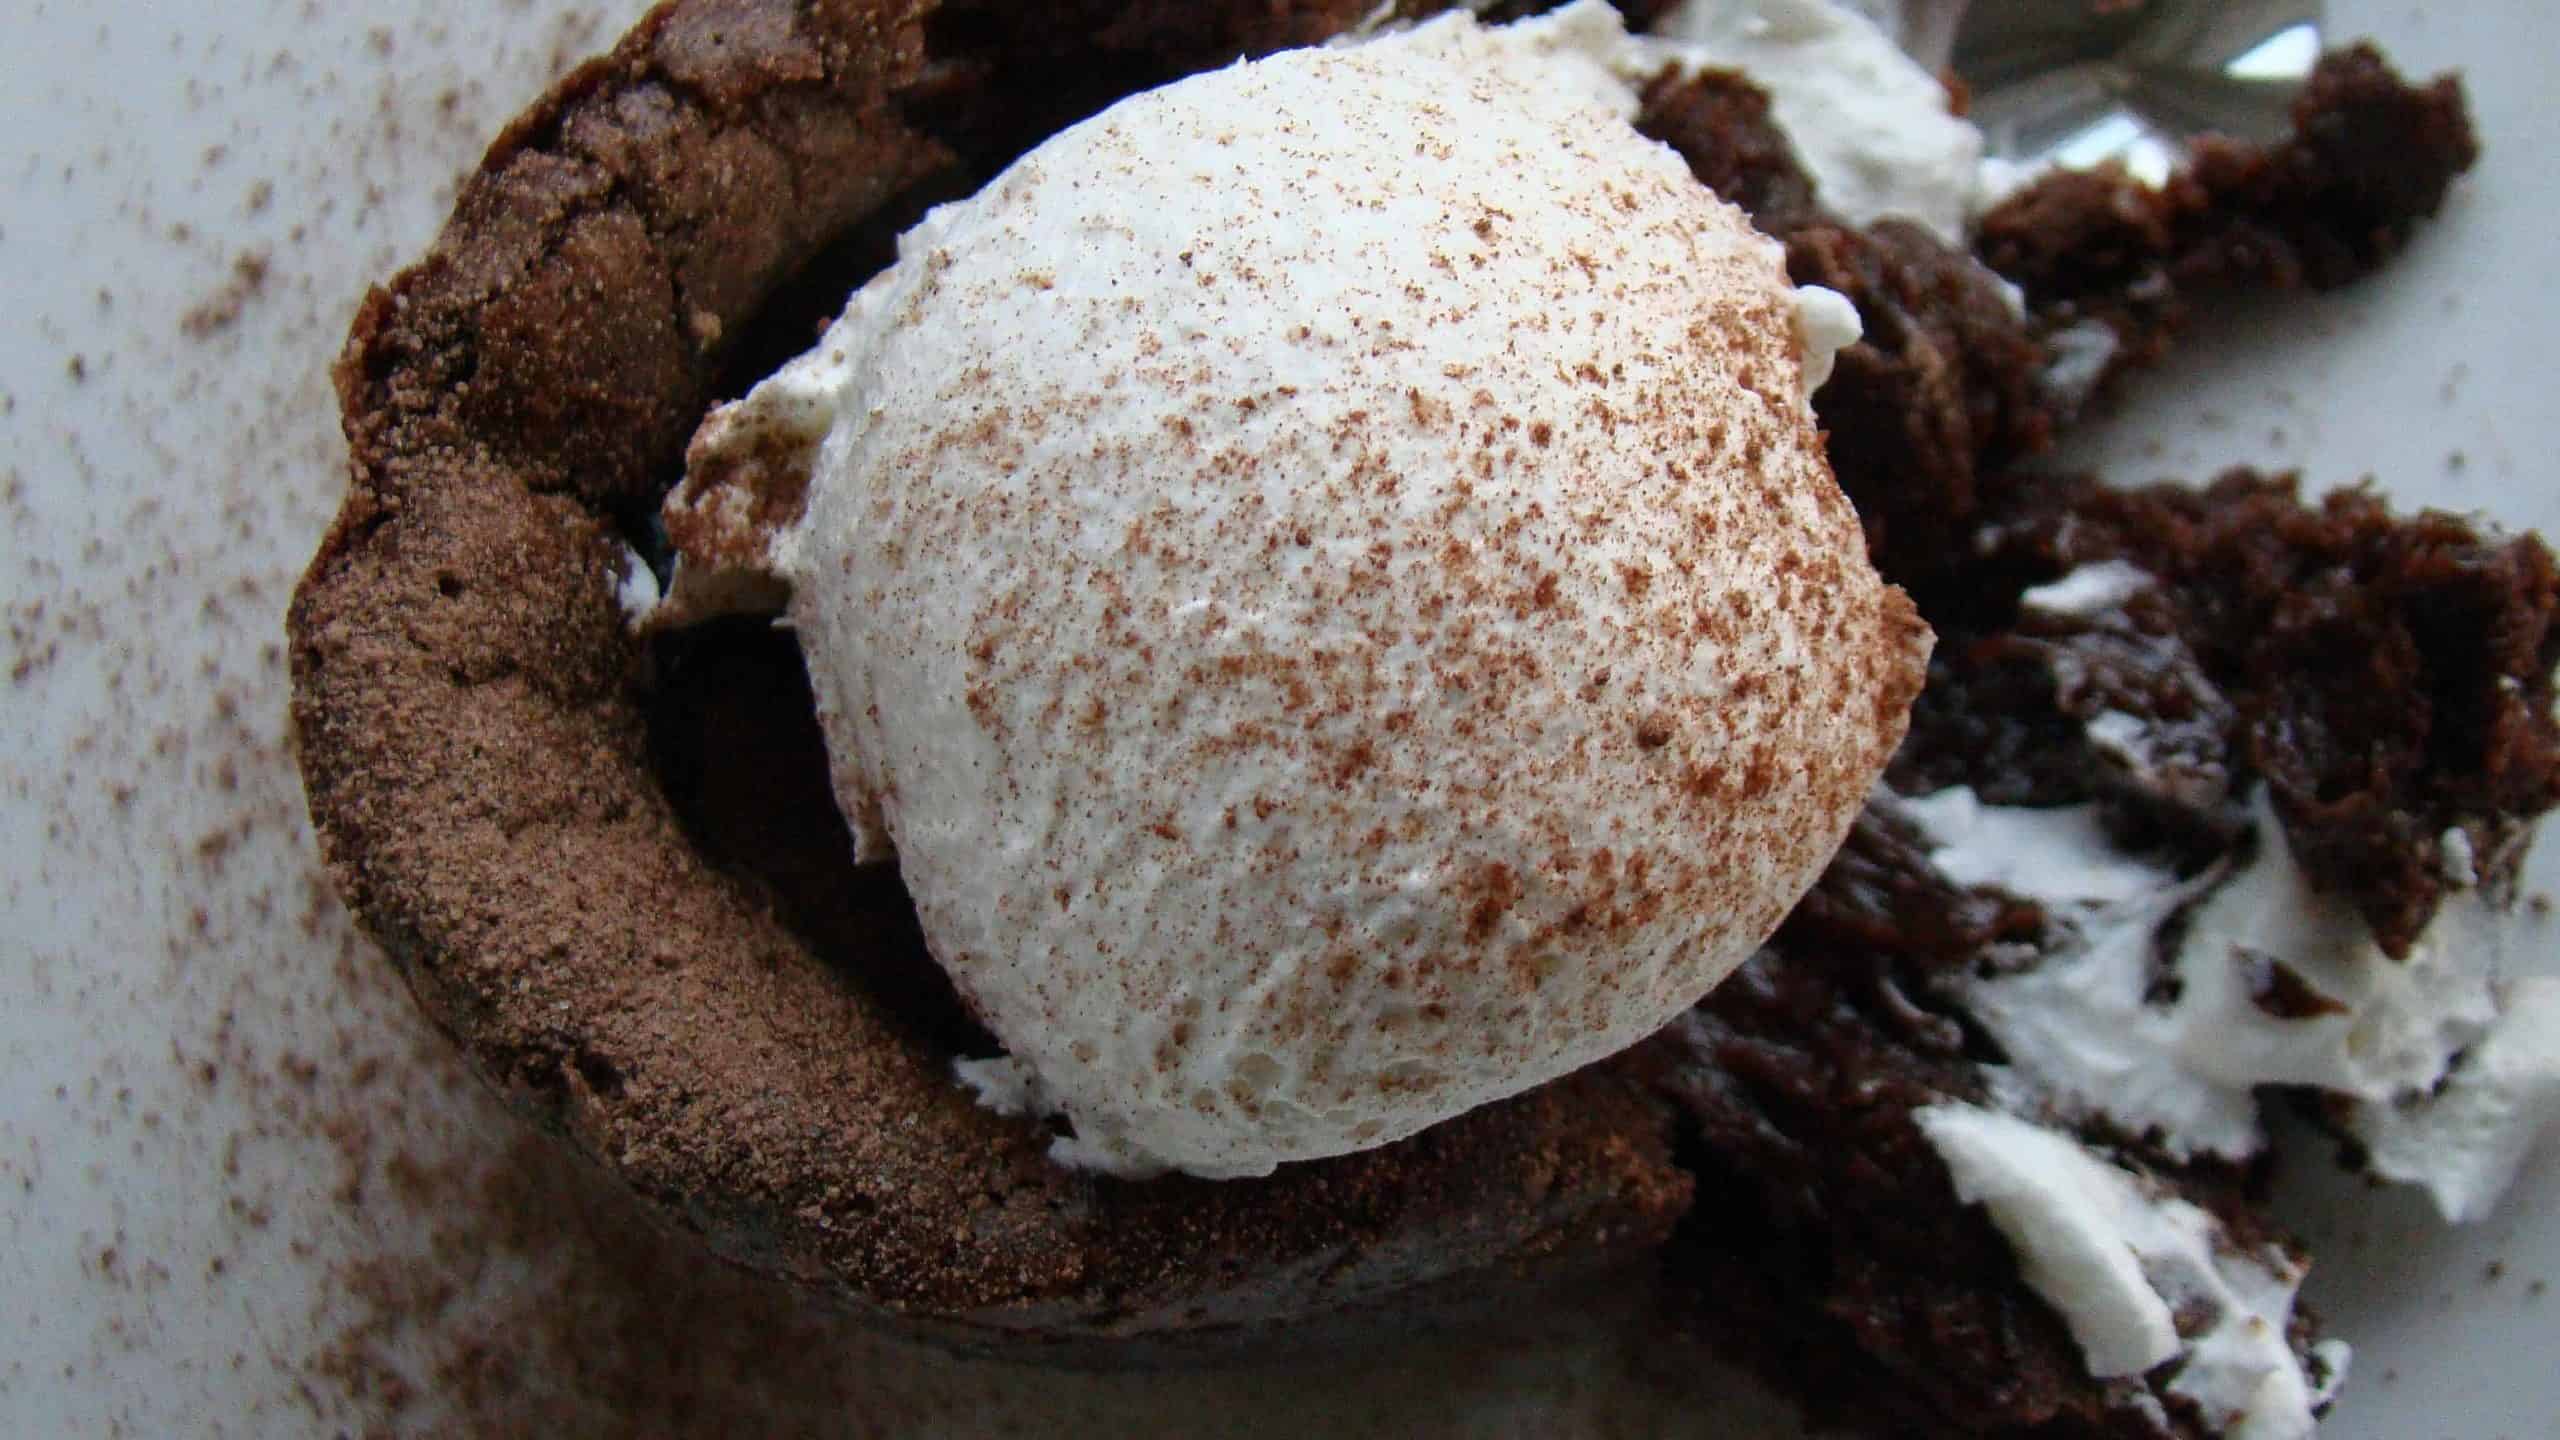 Chocolate lava cake with cream, Creative Commons courtesy photo